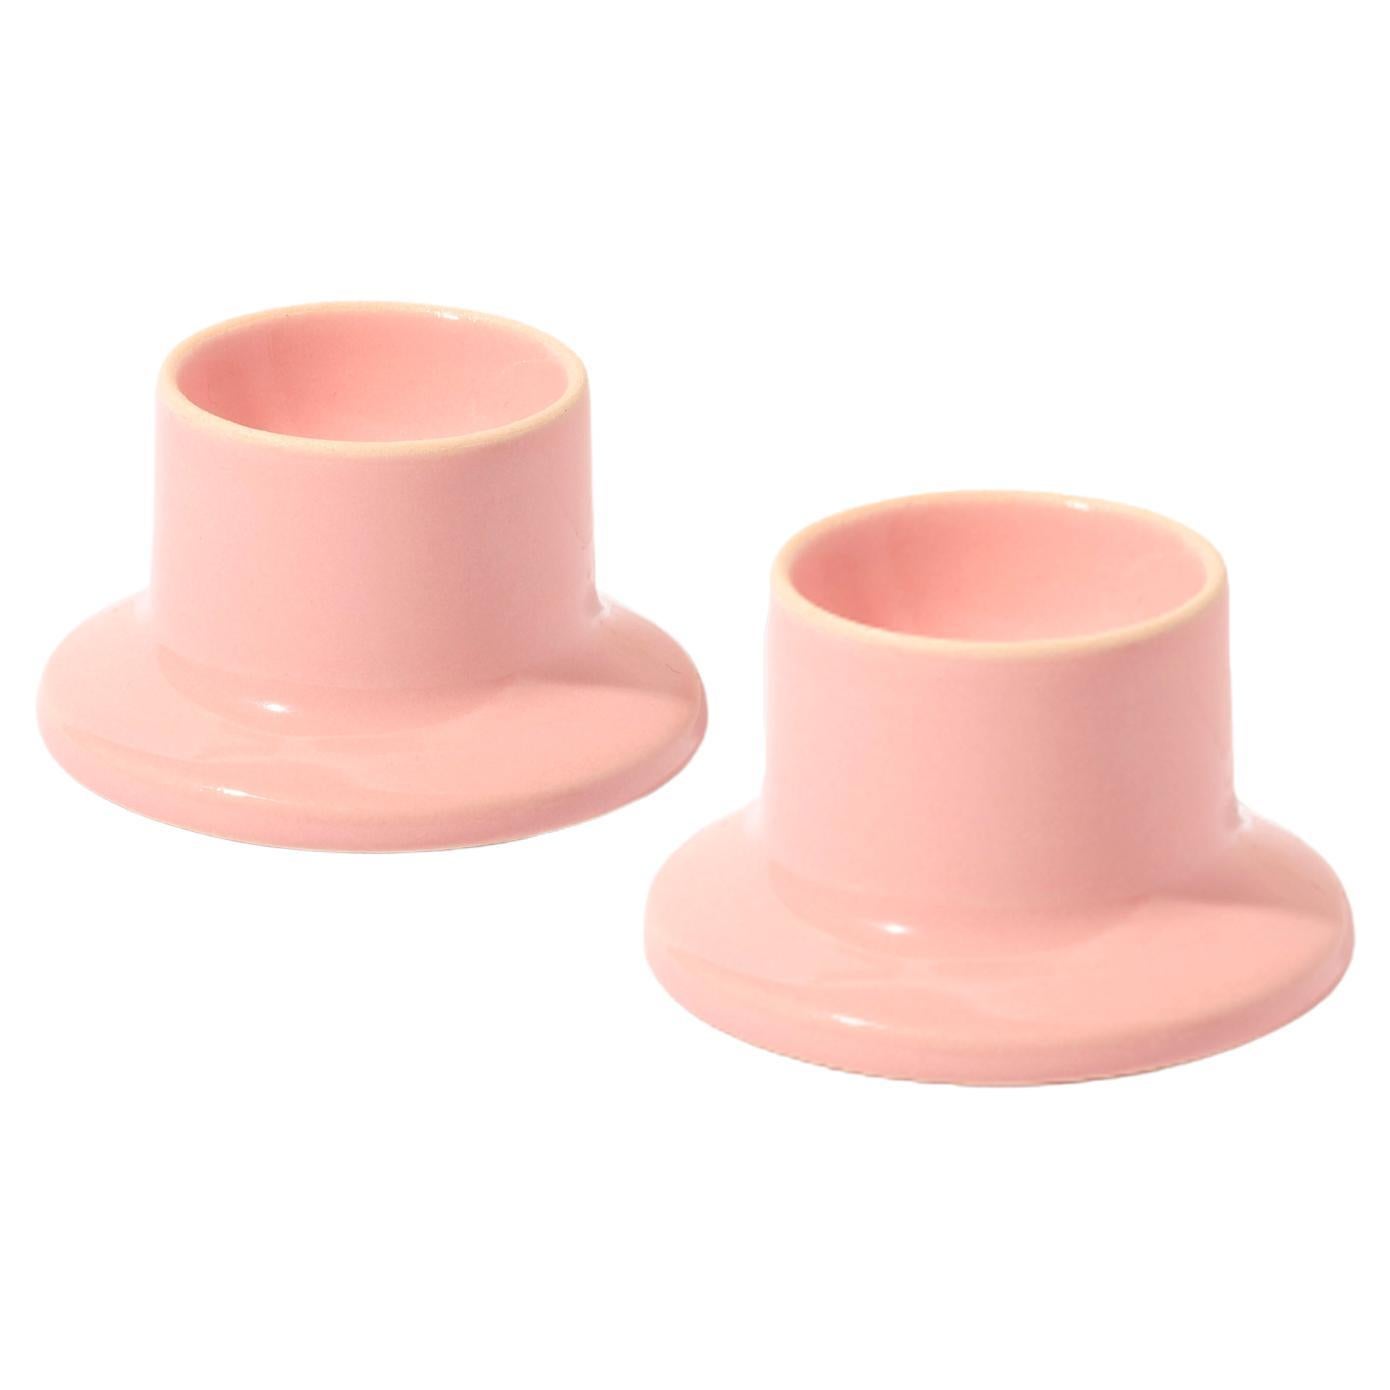 Egg holder / Candy pink / set of 2 by Malwina Konopacka For Sale